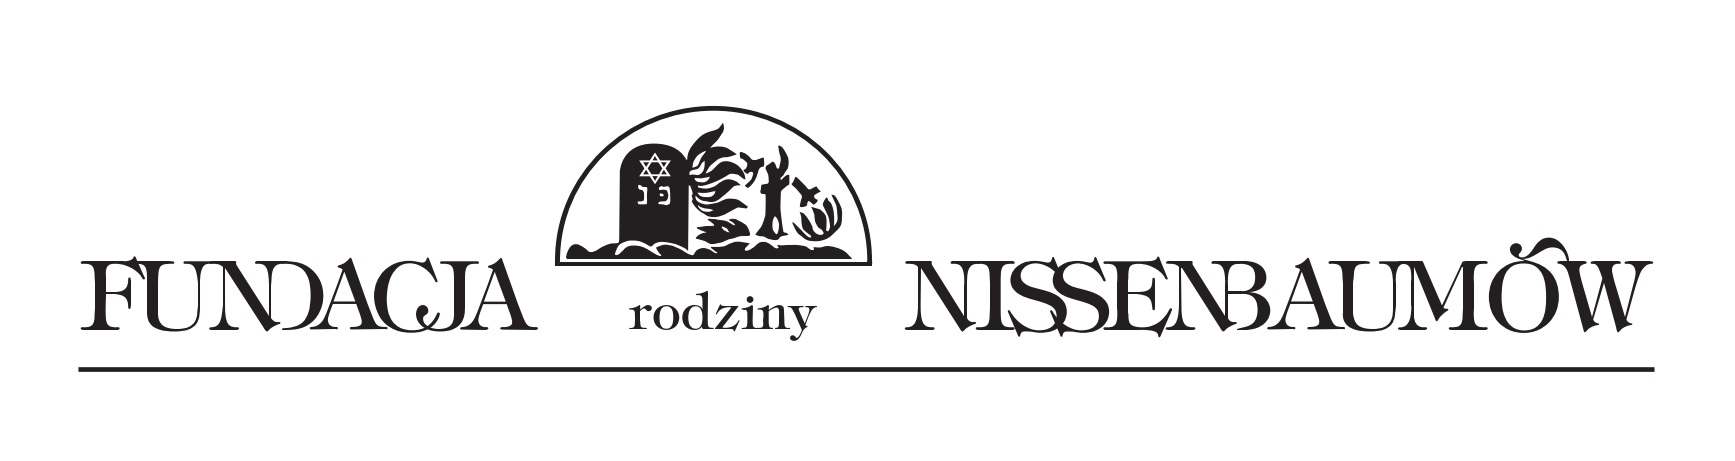 Nissenbaum Family Foundation